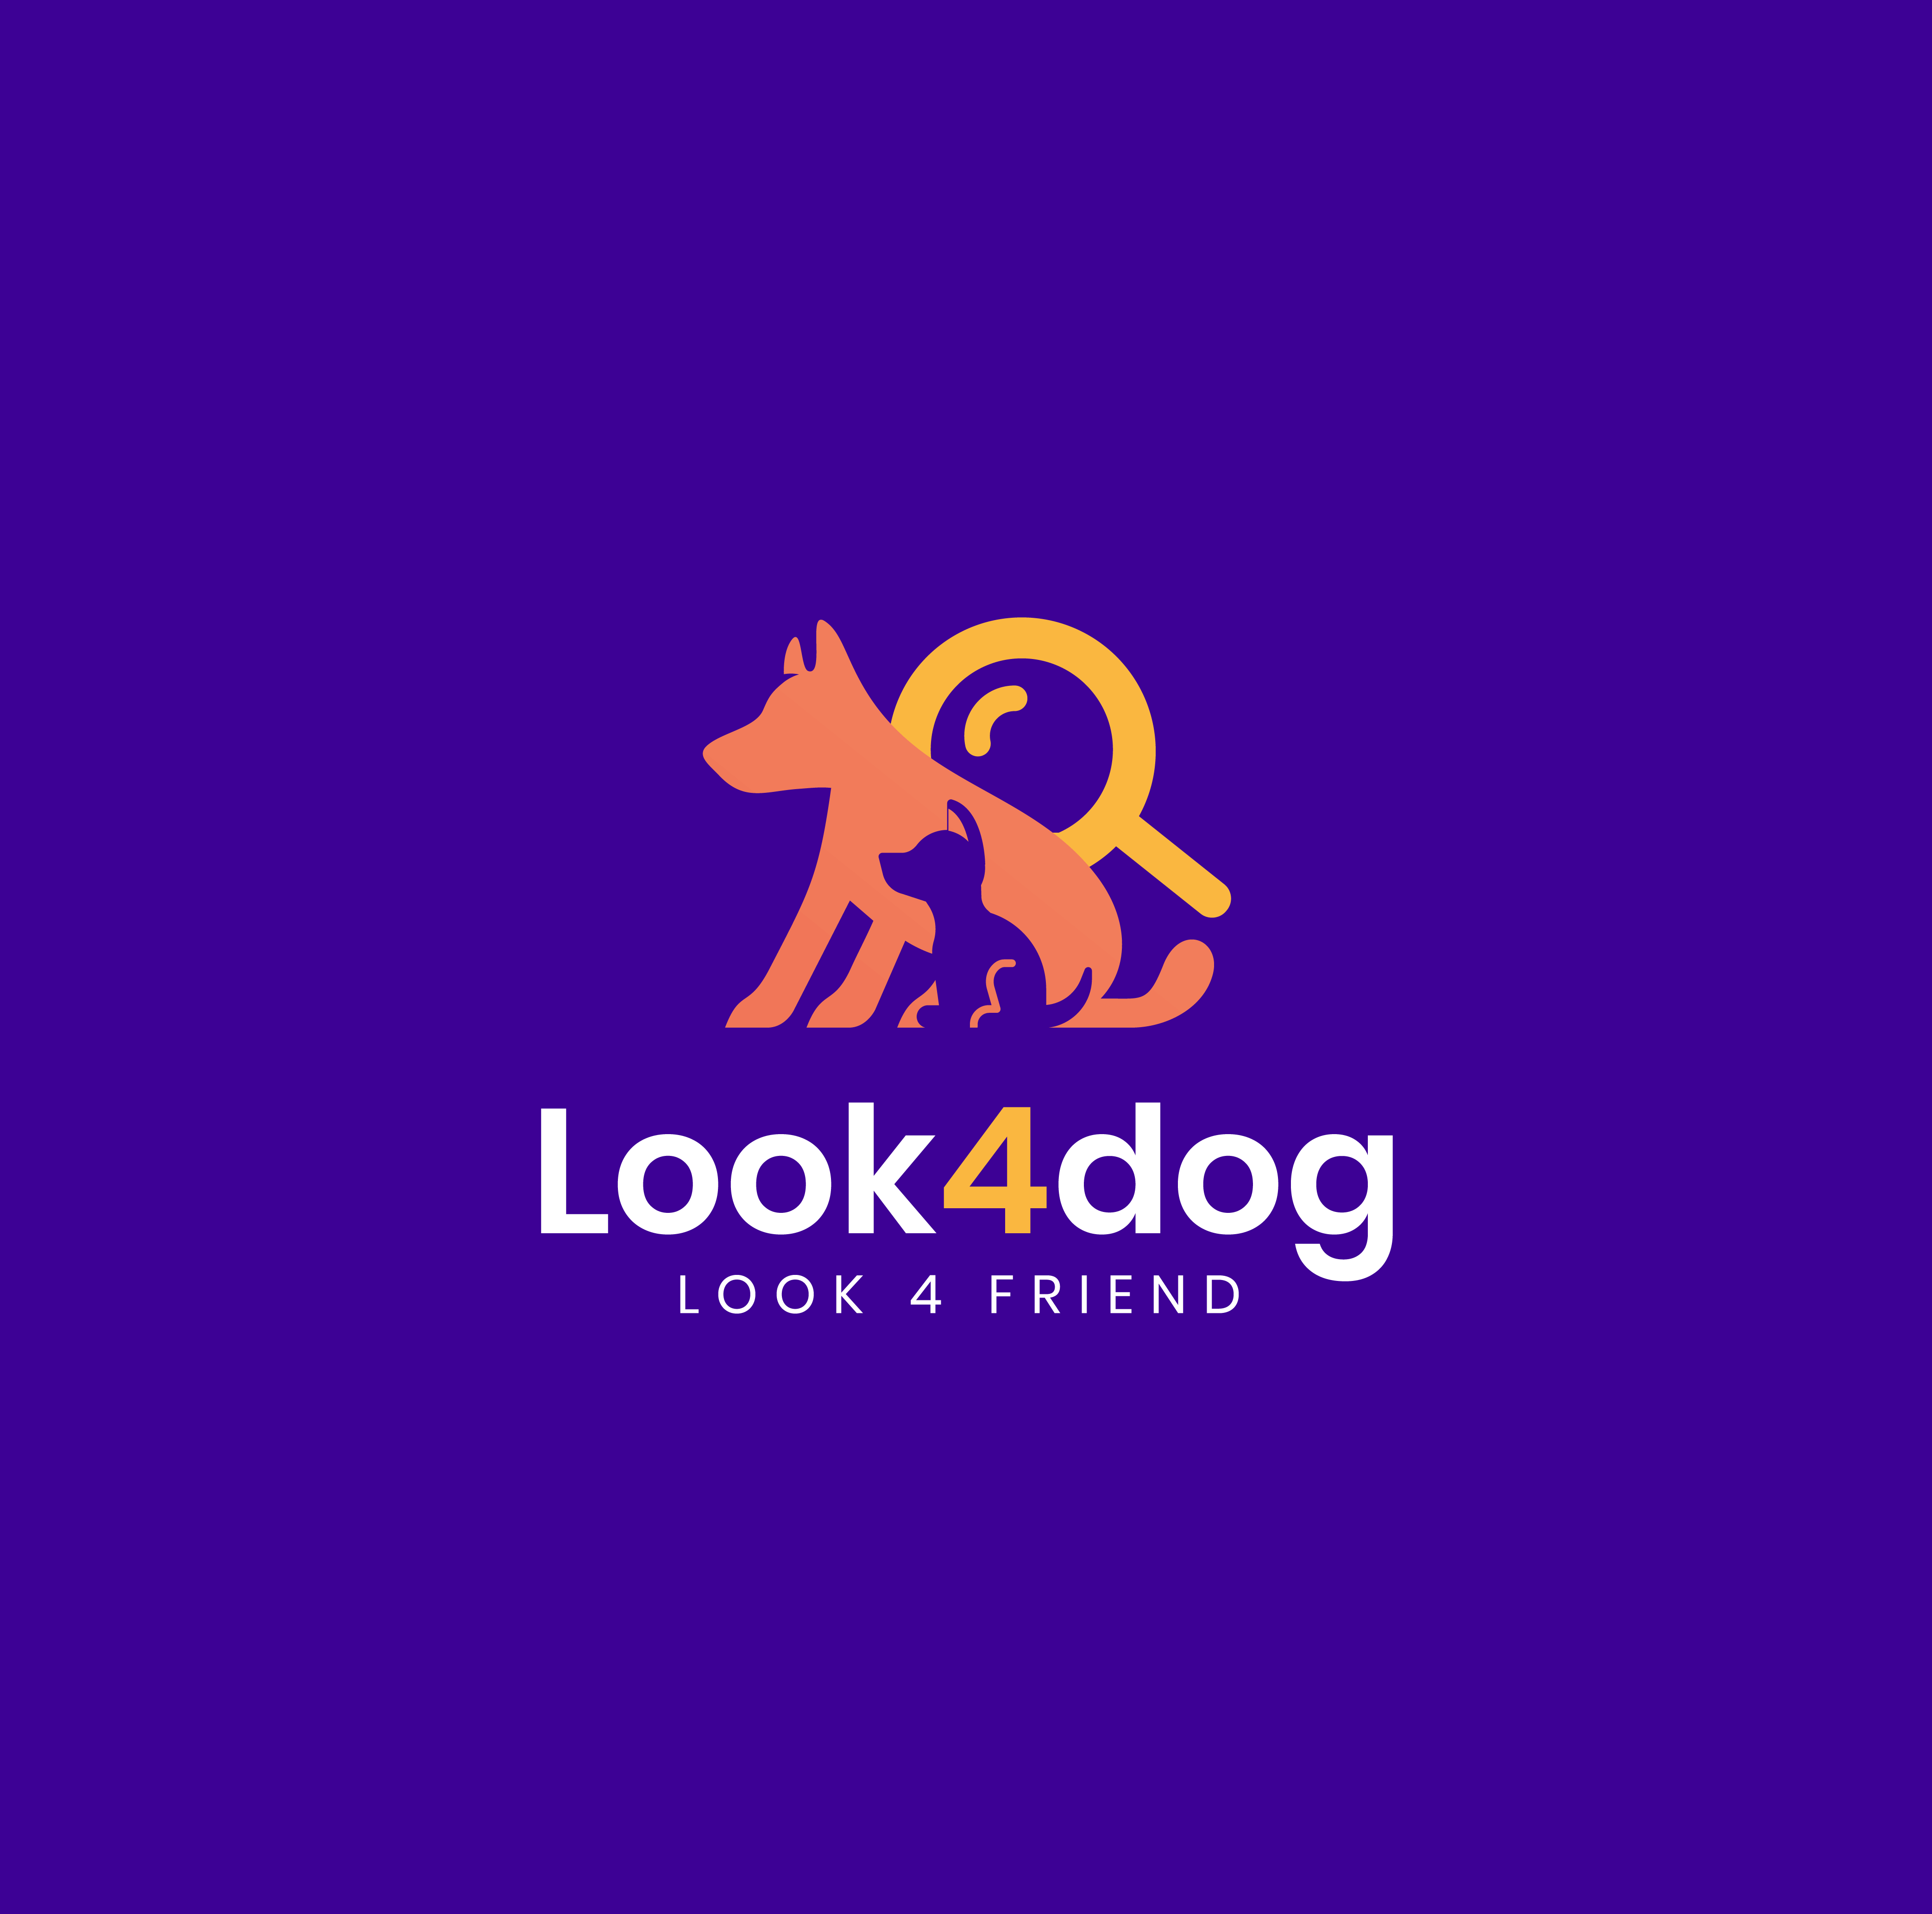 (c) Look4dog.com